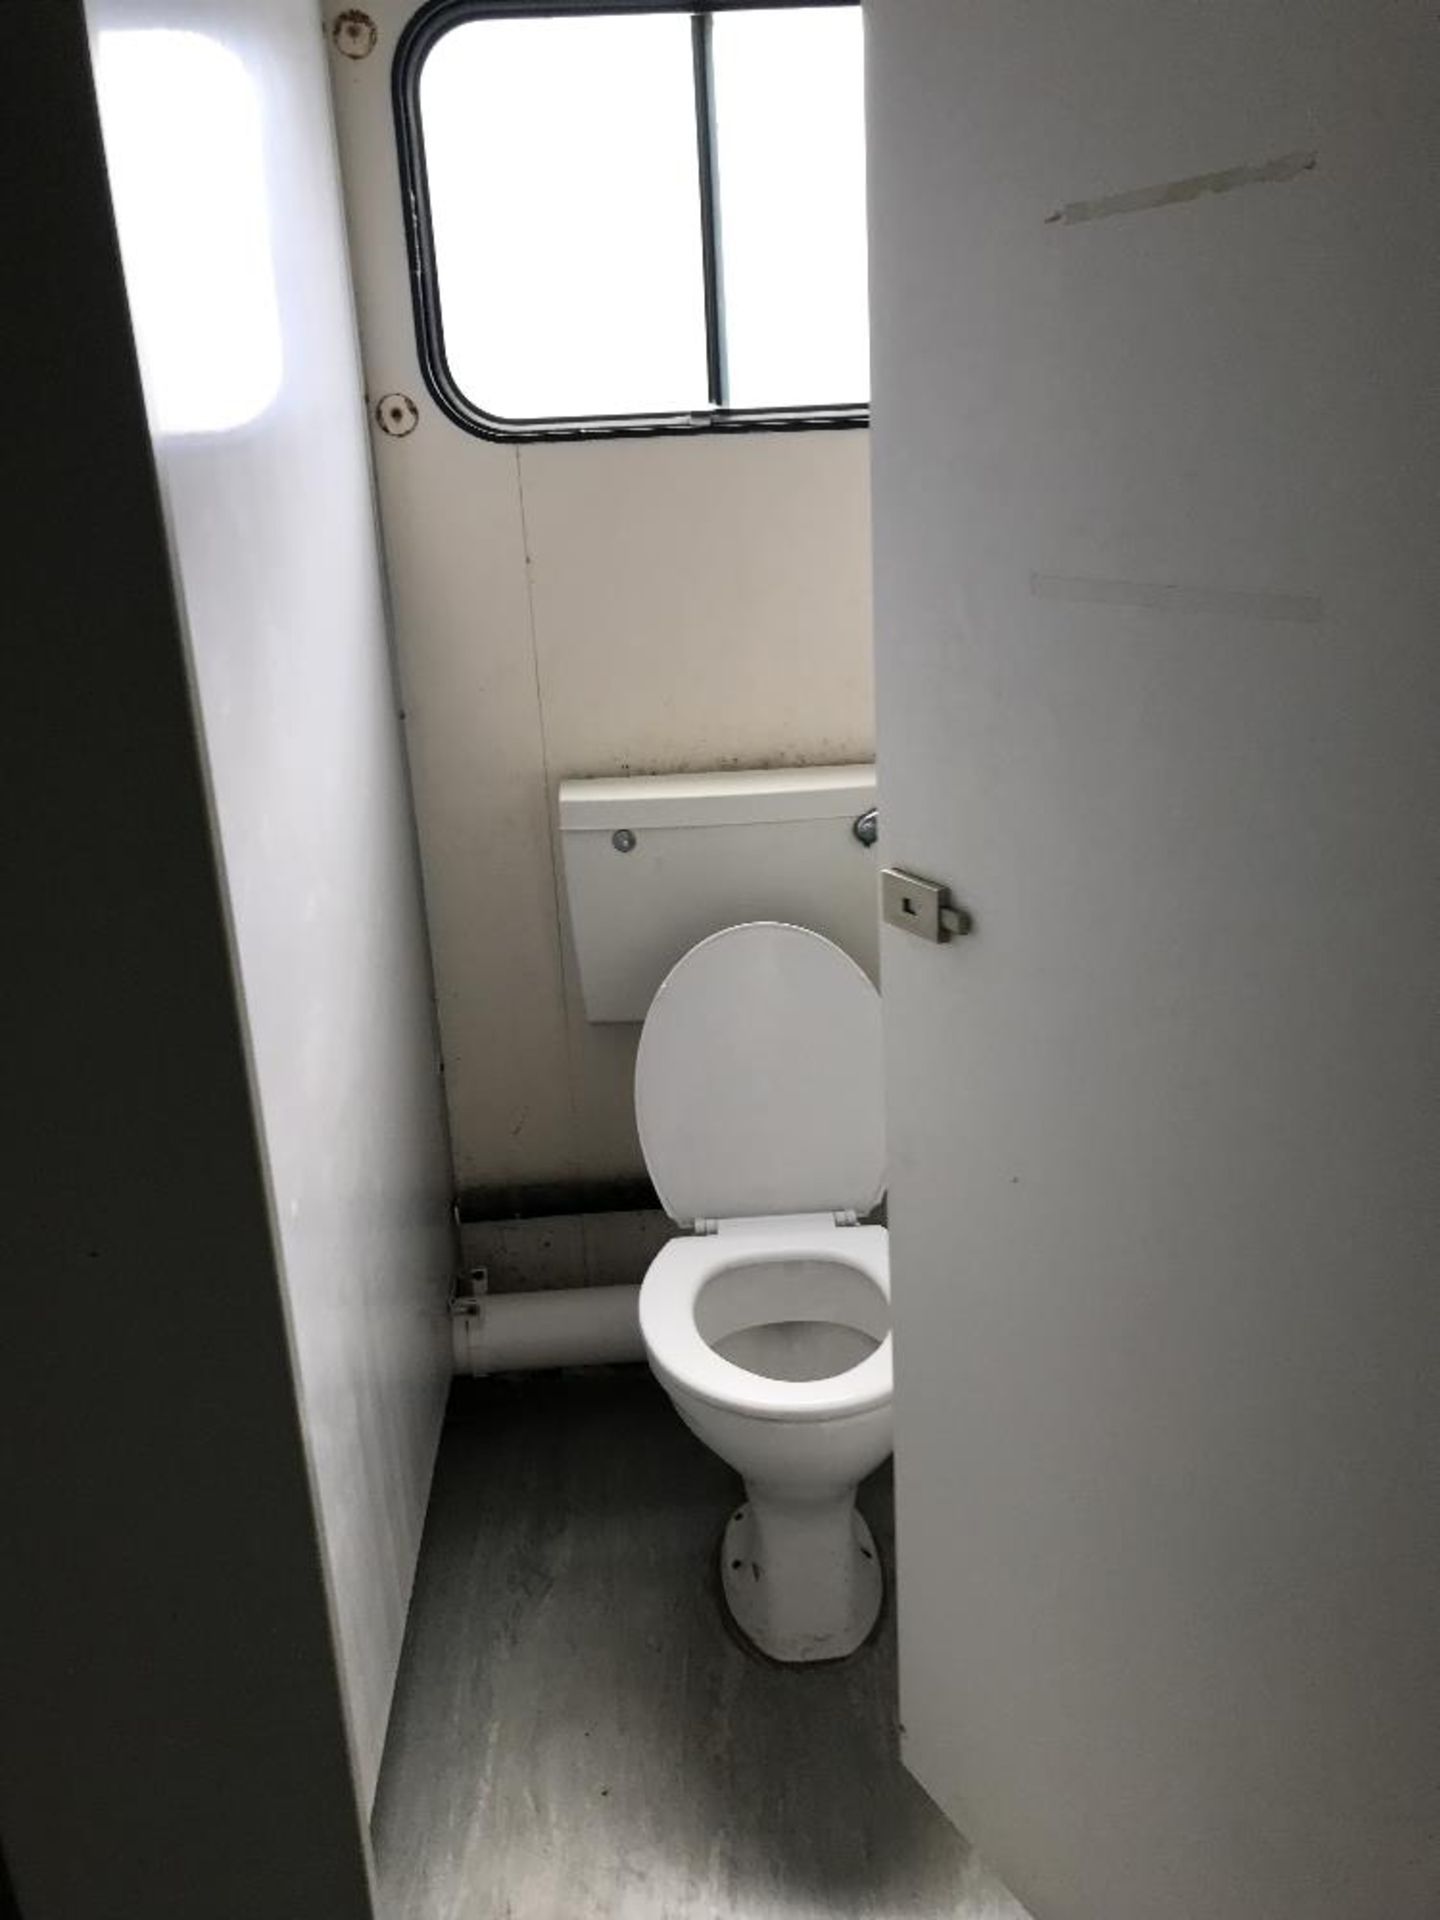 Portacabin jack legged staff toilet unit - Image 8 of 12